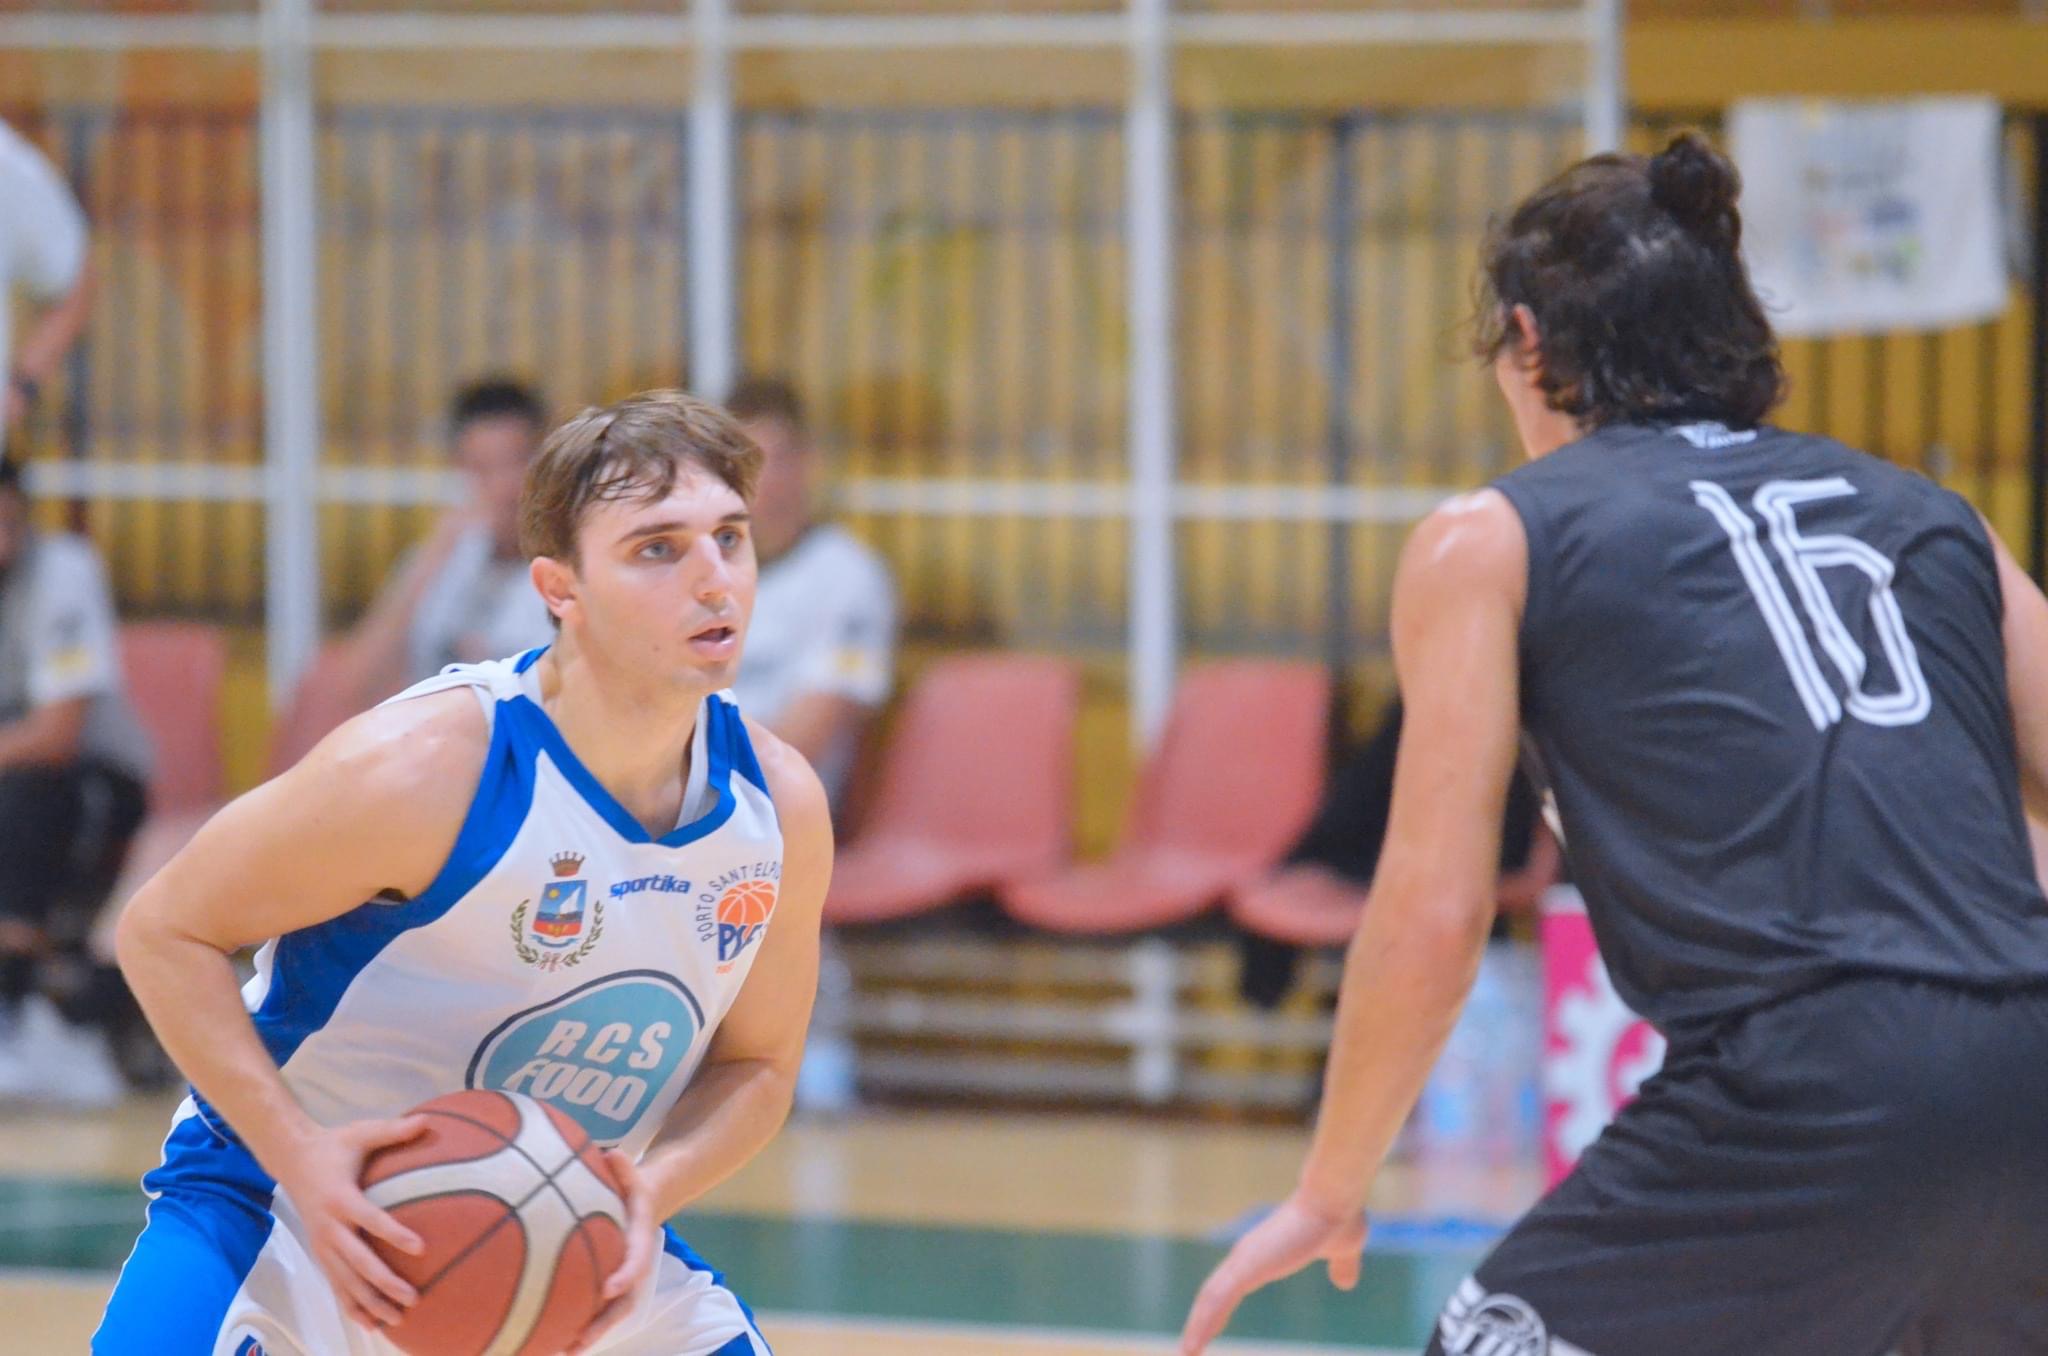 PSE Basket - Montemarciano Basket 56-69: Mancata ancora la prima gioia casalinga